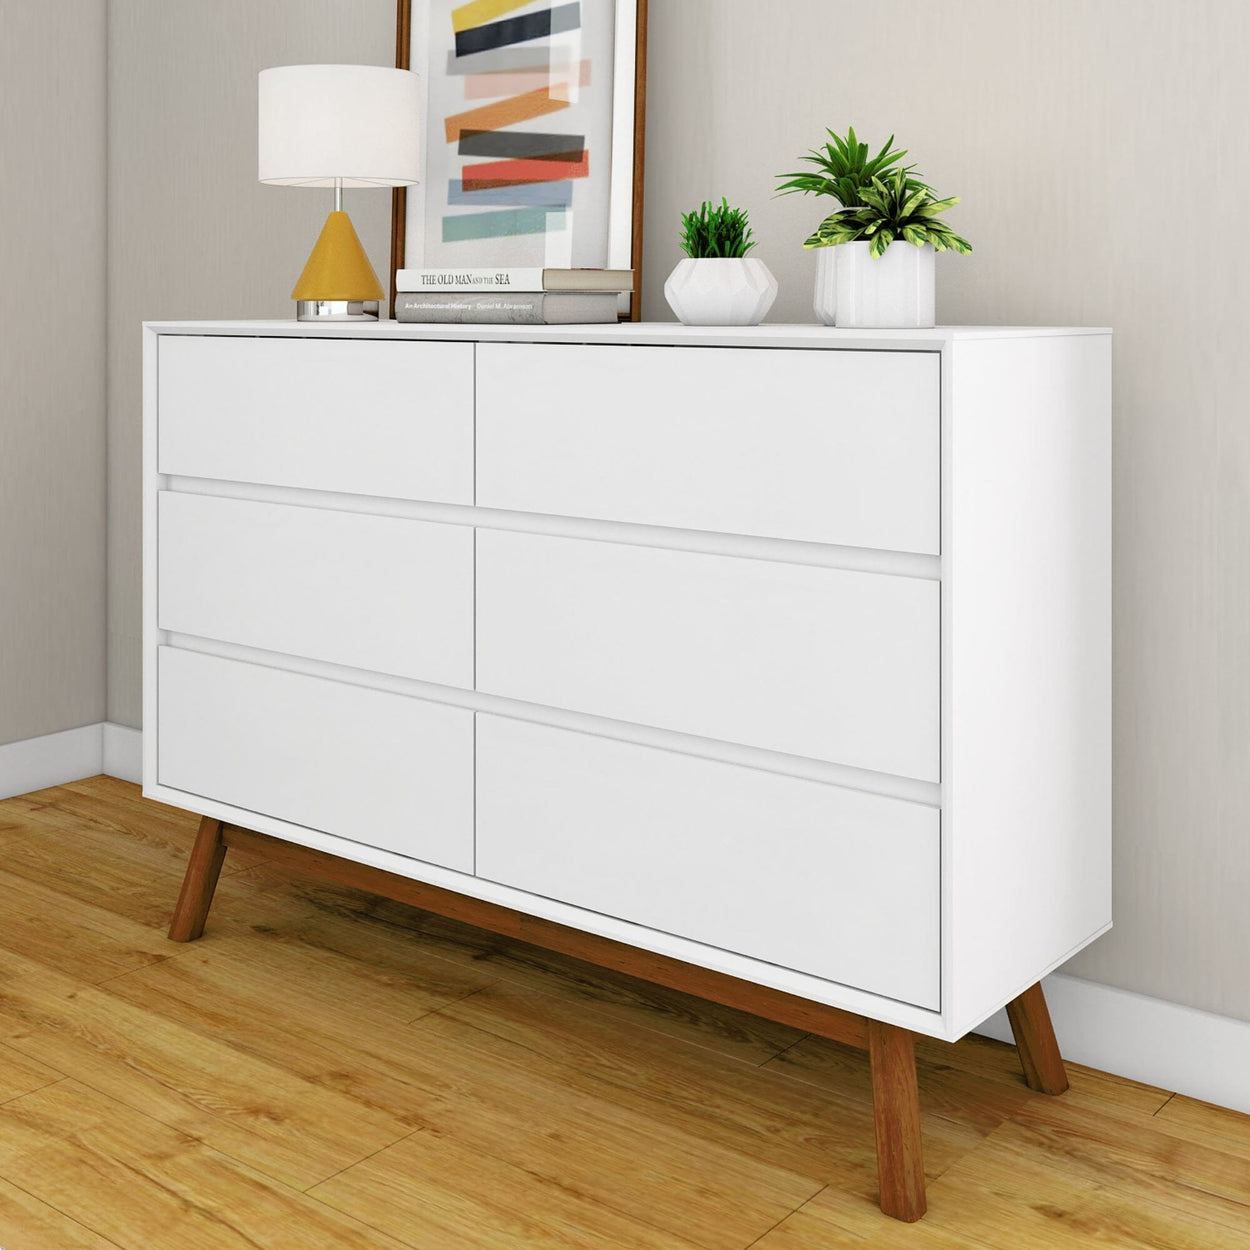 200006-207 : Furniture Mid-Century Modern 6-Drawer Dresser, White/Pecan